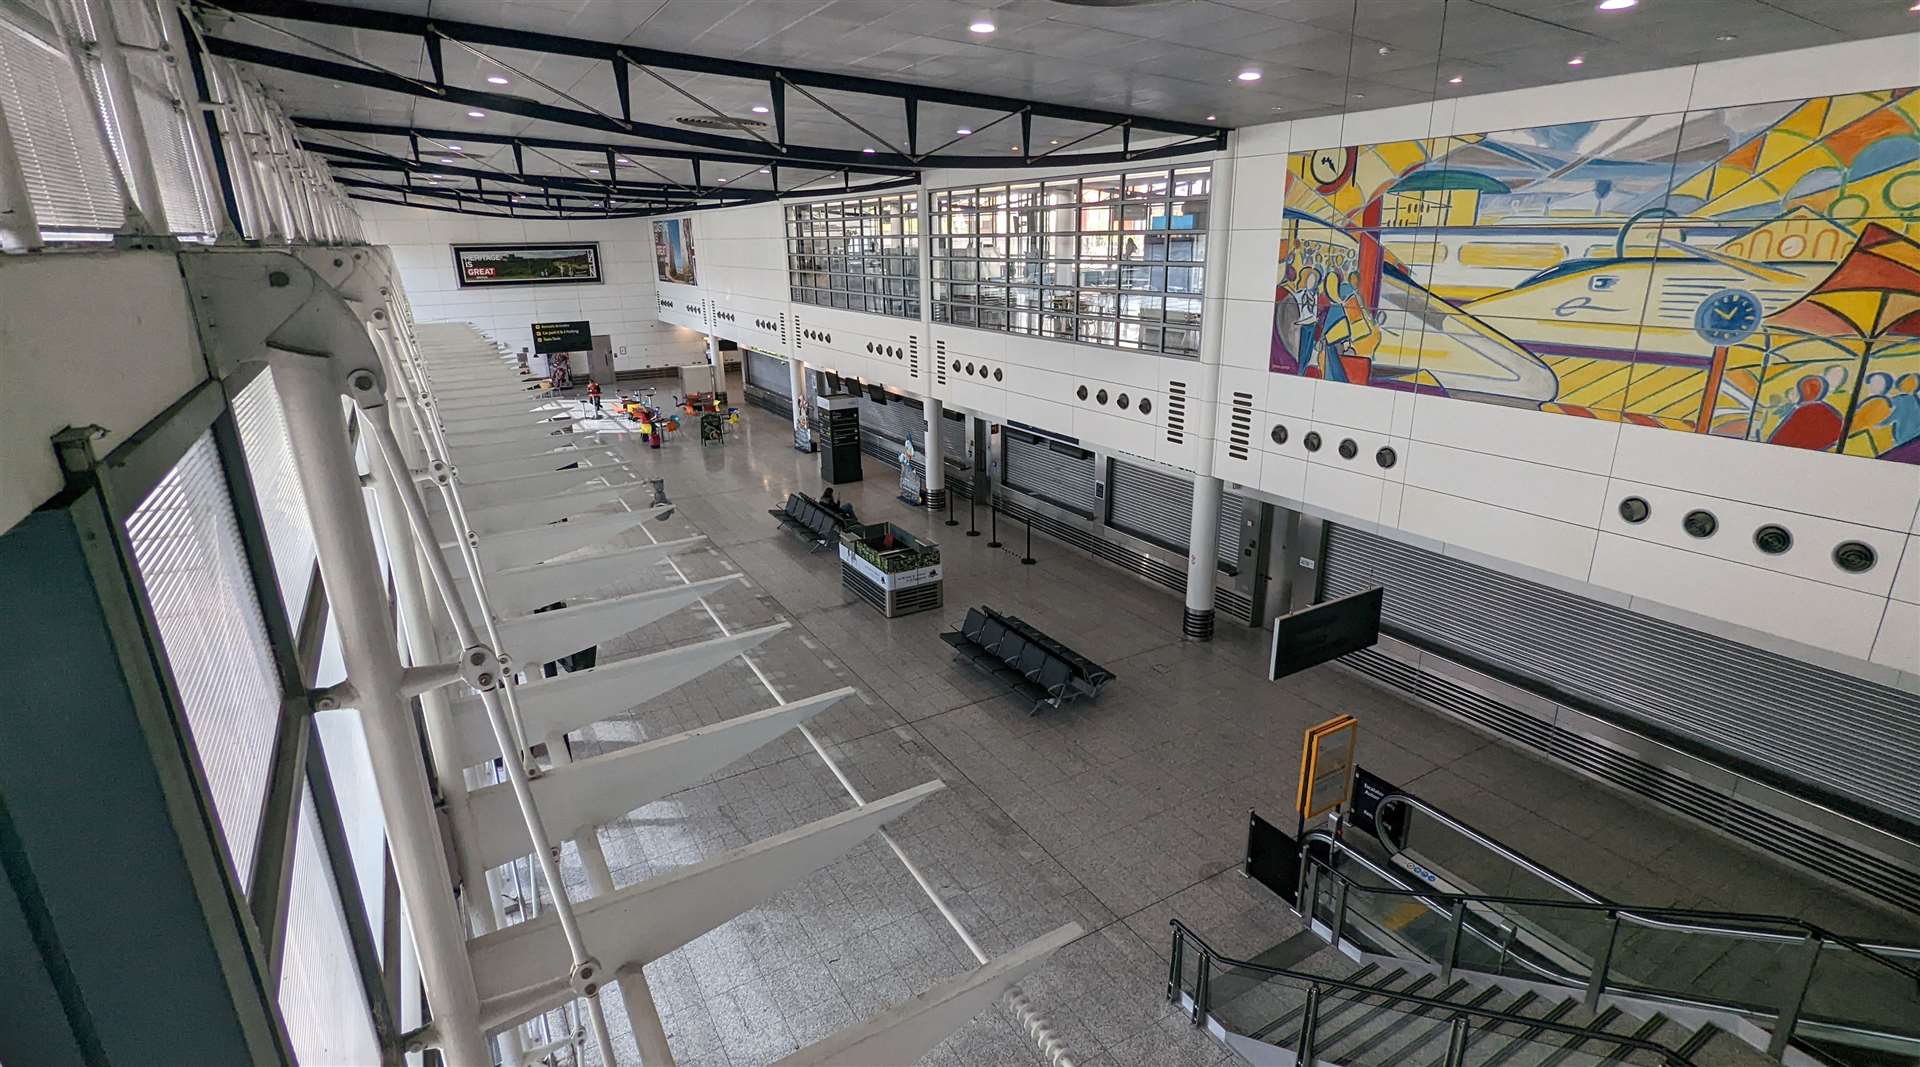 A deserted and shuttered Ashford International railway station